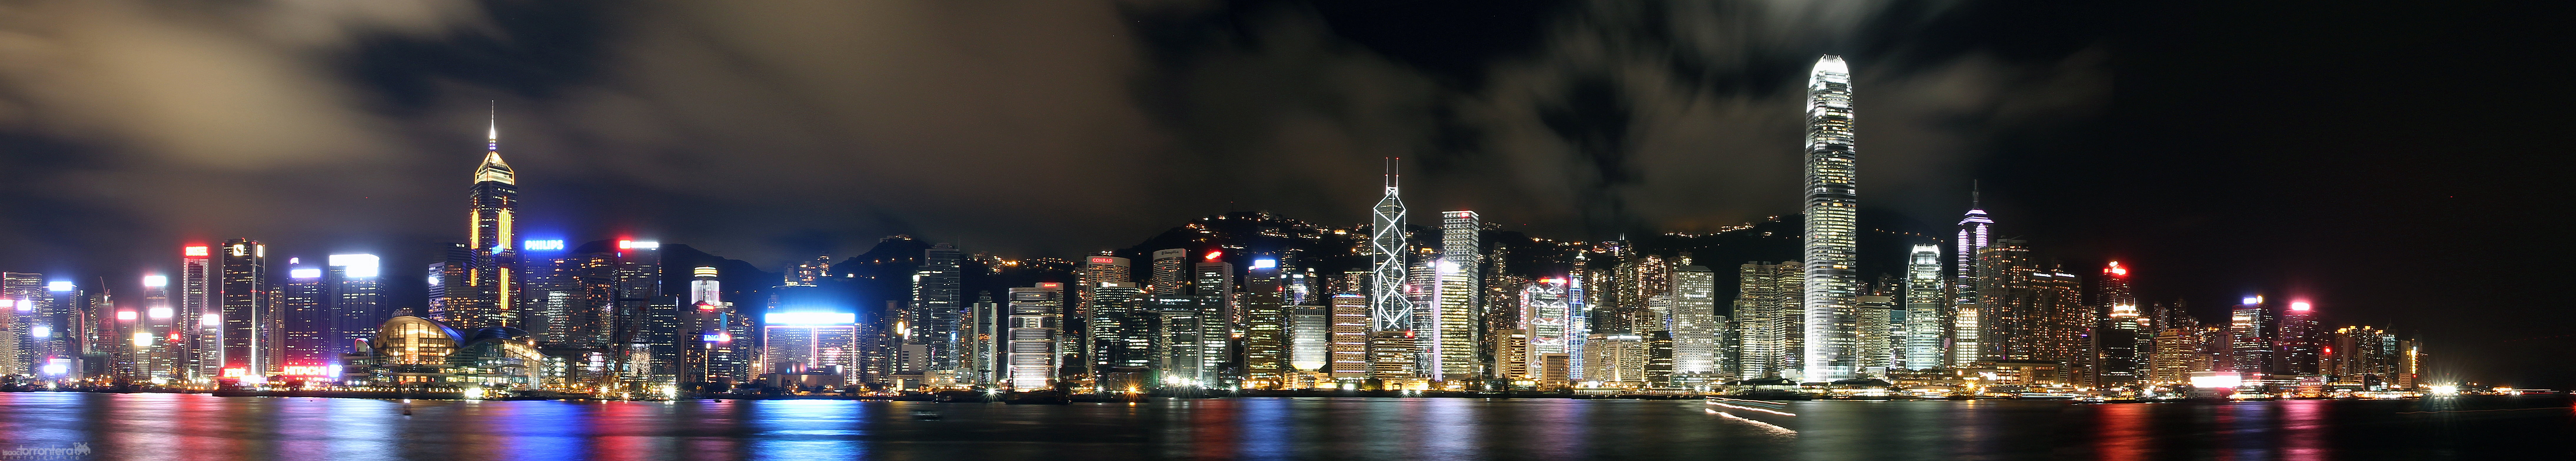 panorama shot photography of buildings during night, hong kong